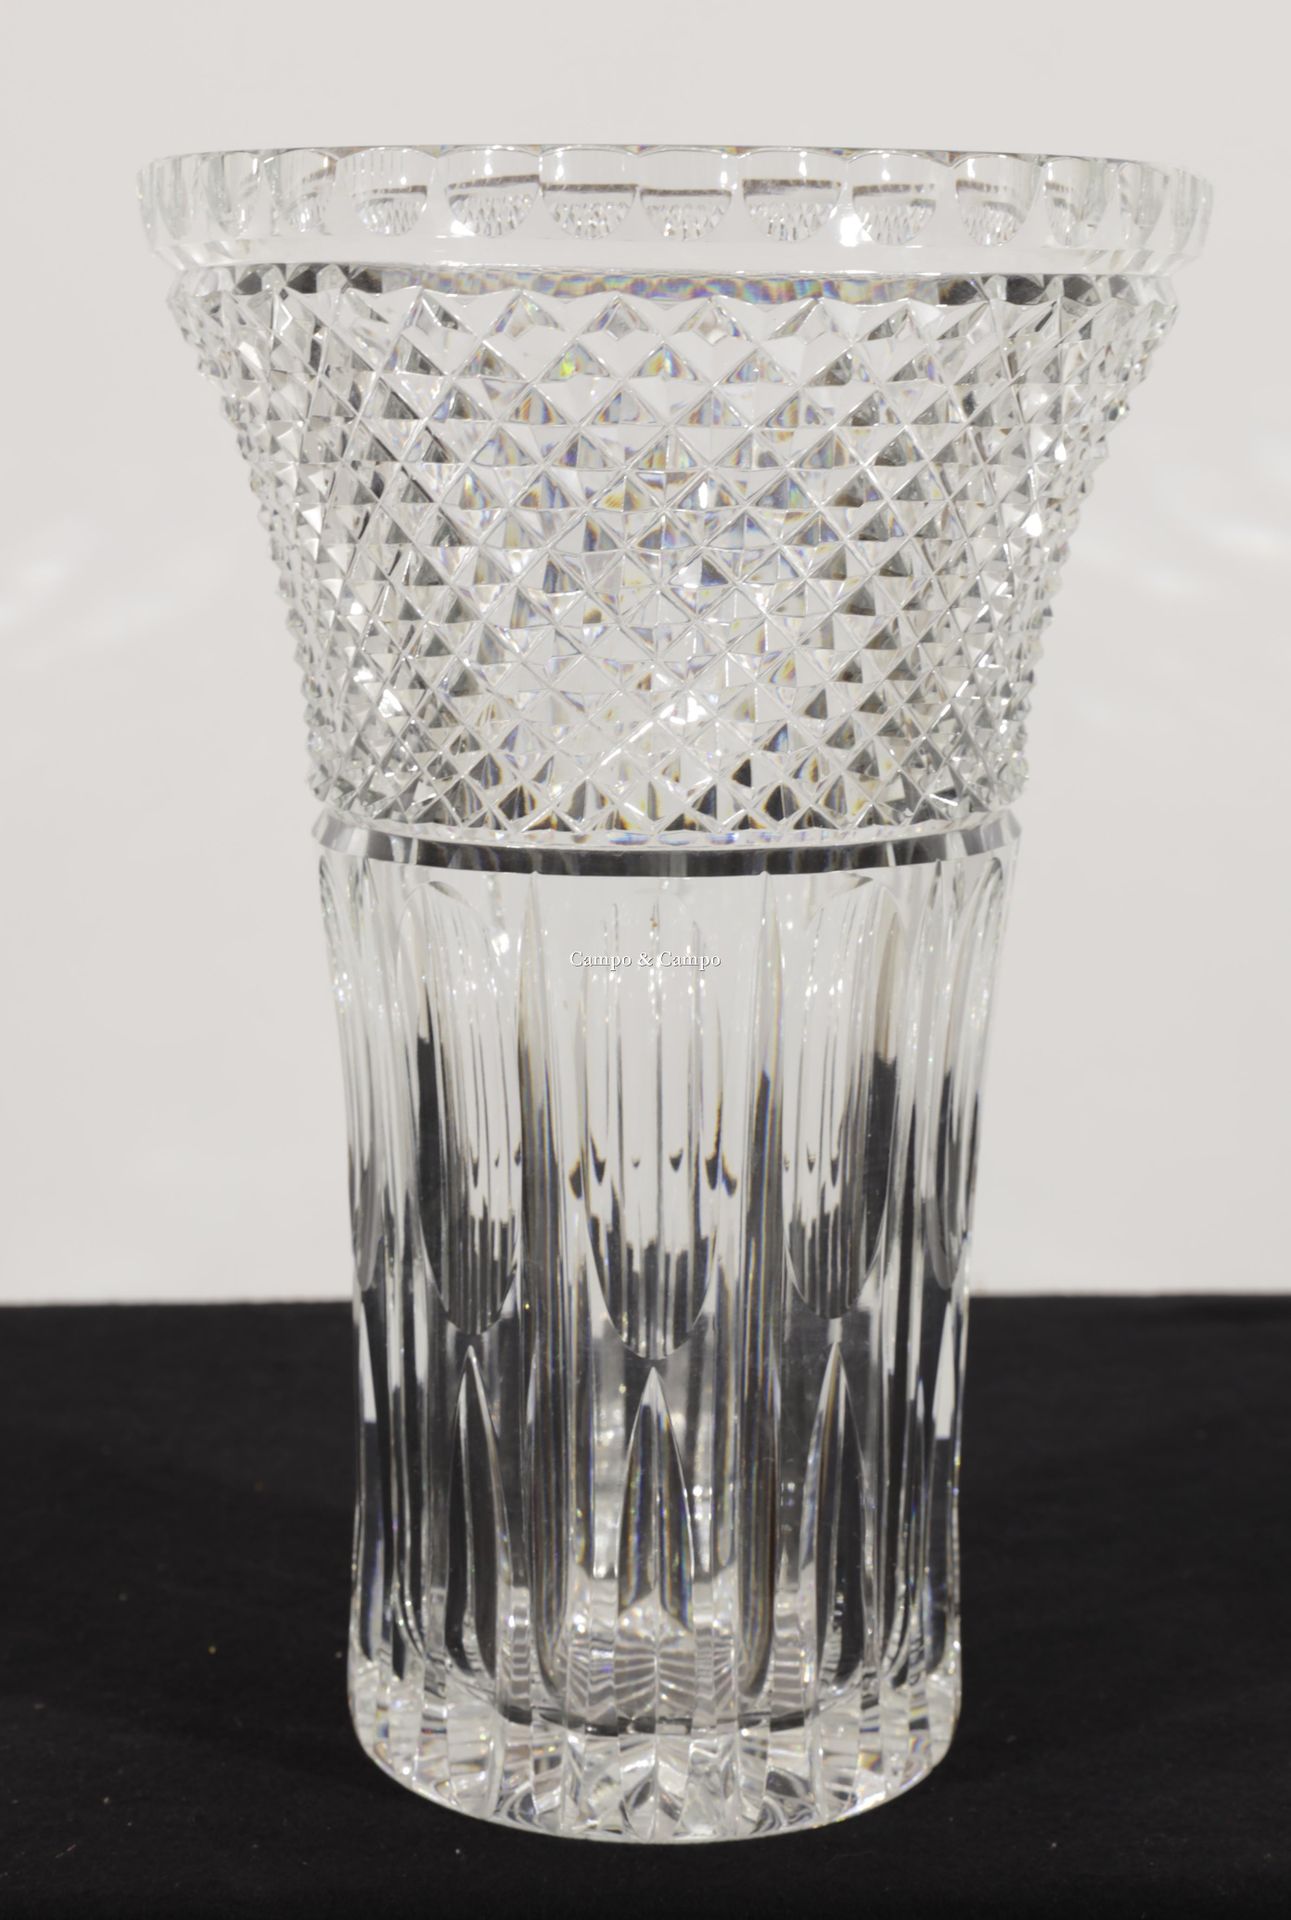 VARIA Vase en cristal clair, possiblement cristal de Bohème
Vaas van helder kris&hellip;